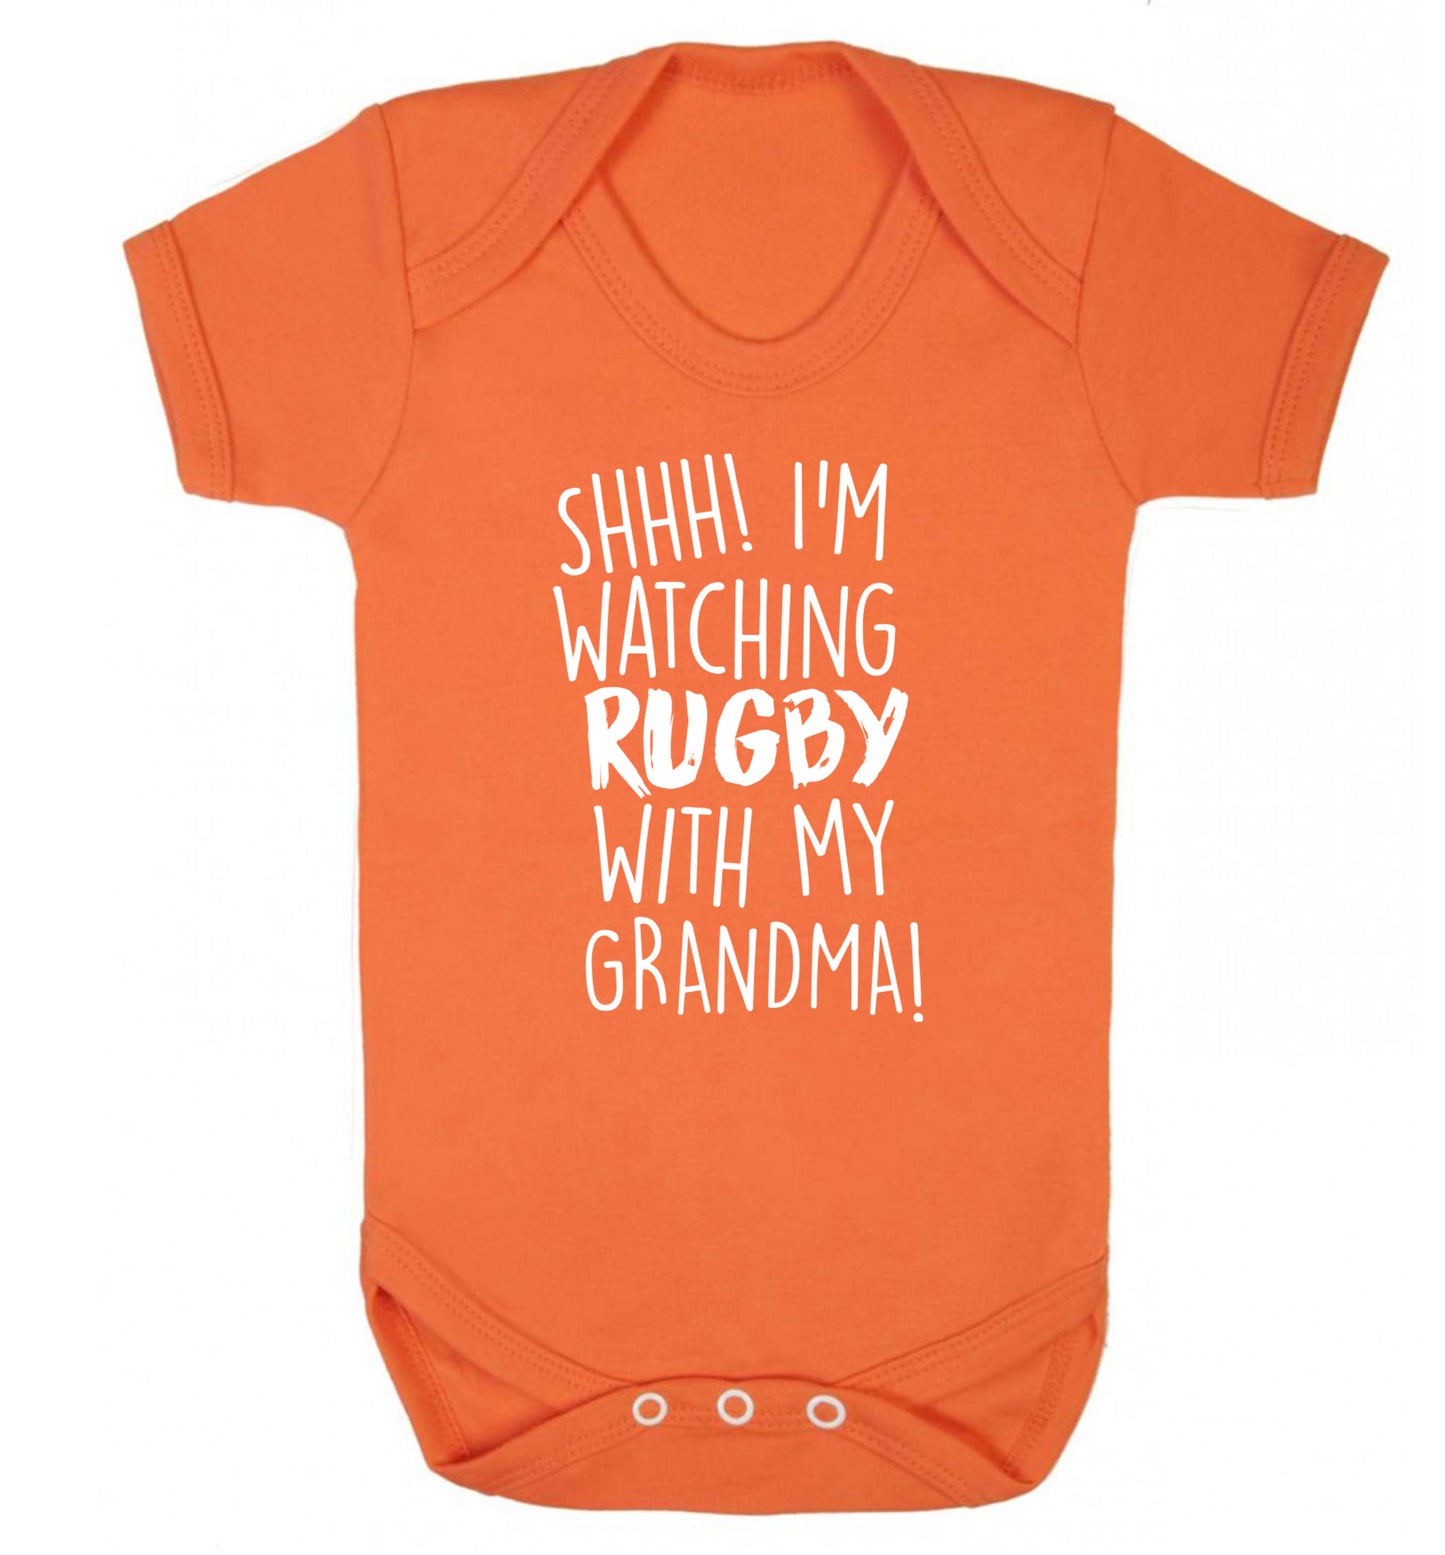 Shh I'm watching rugby with my grandma Baby Vest orange 18-24 months